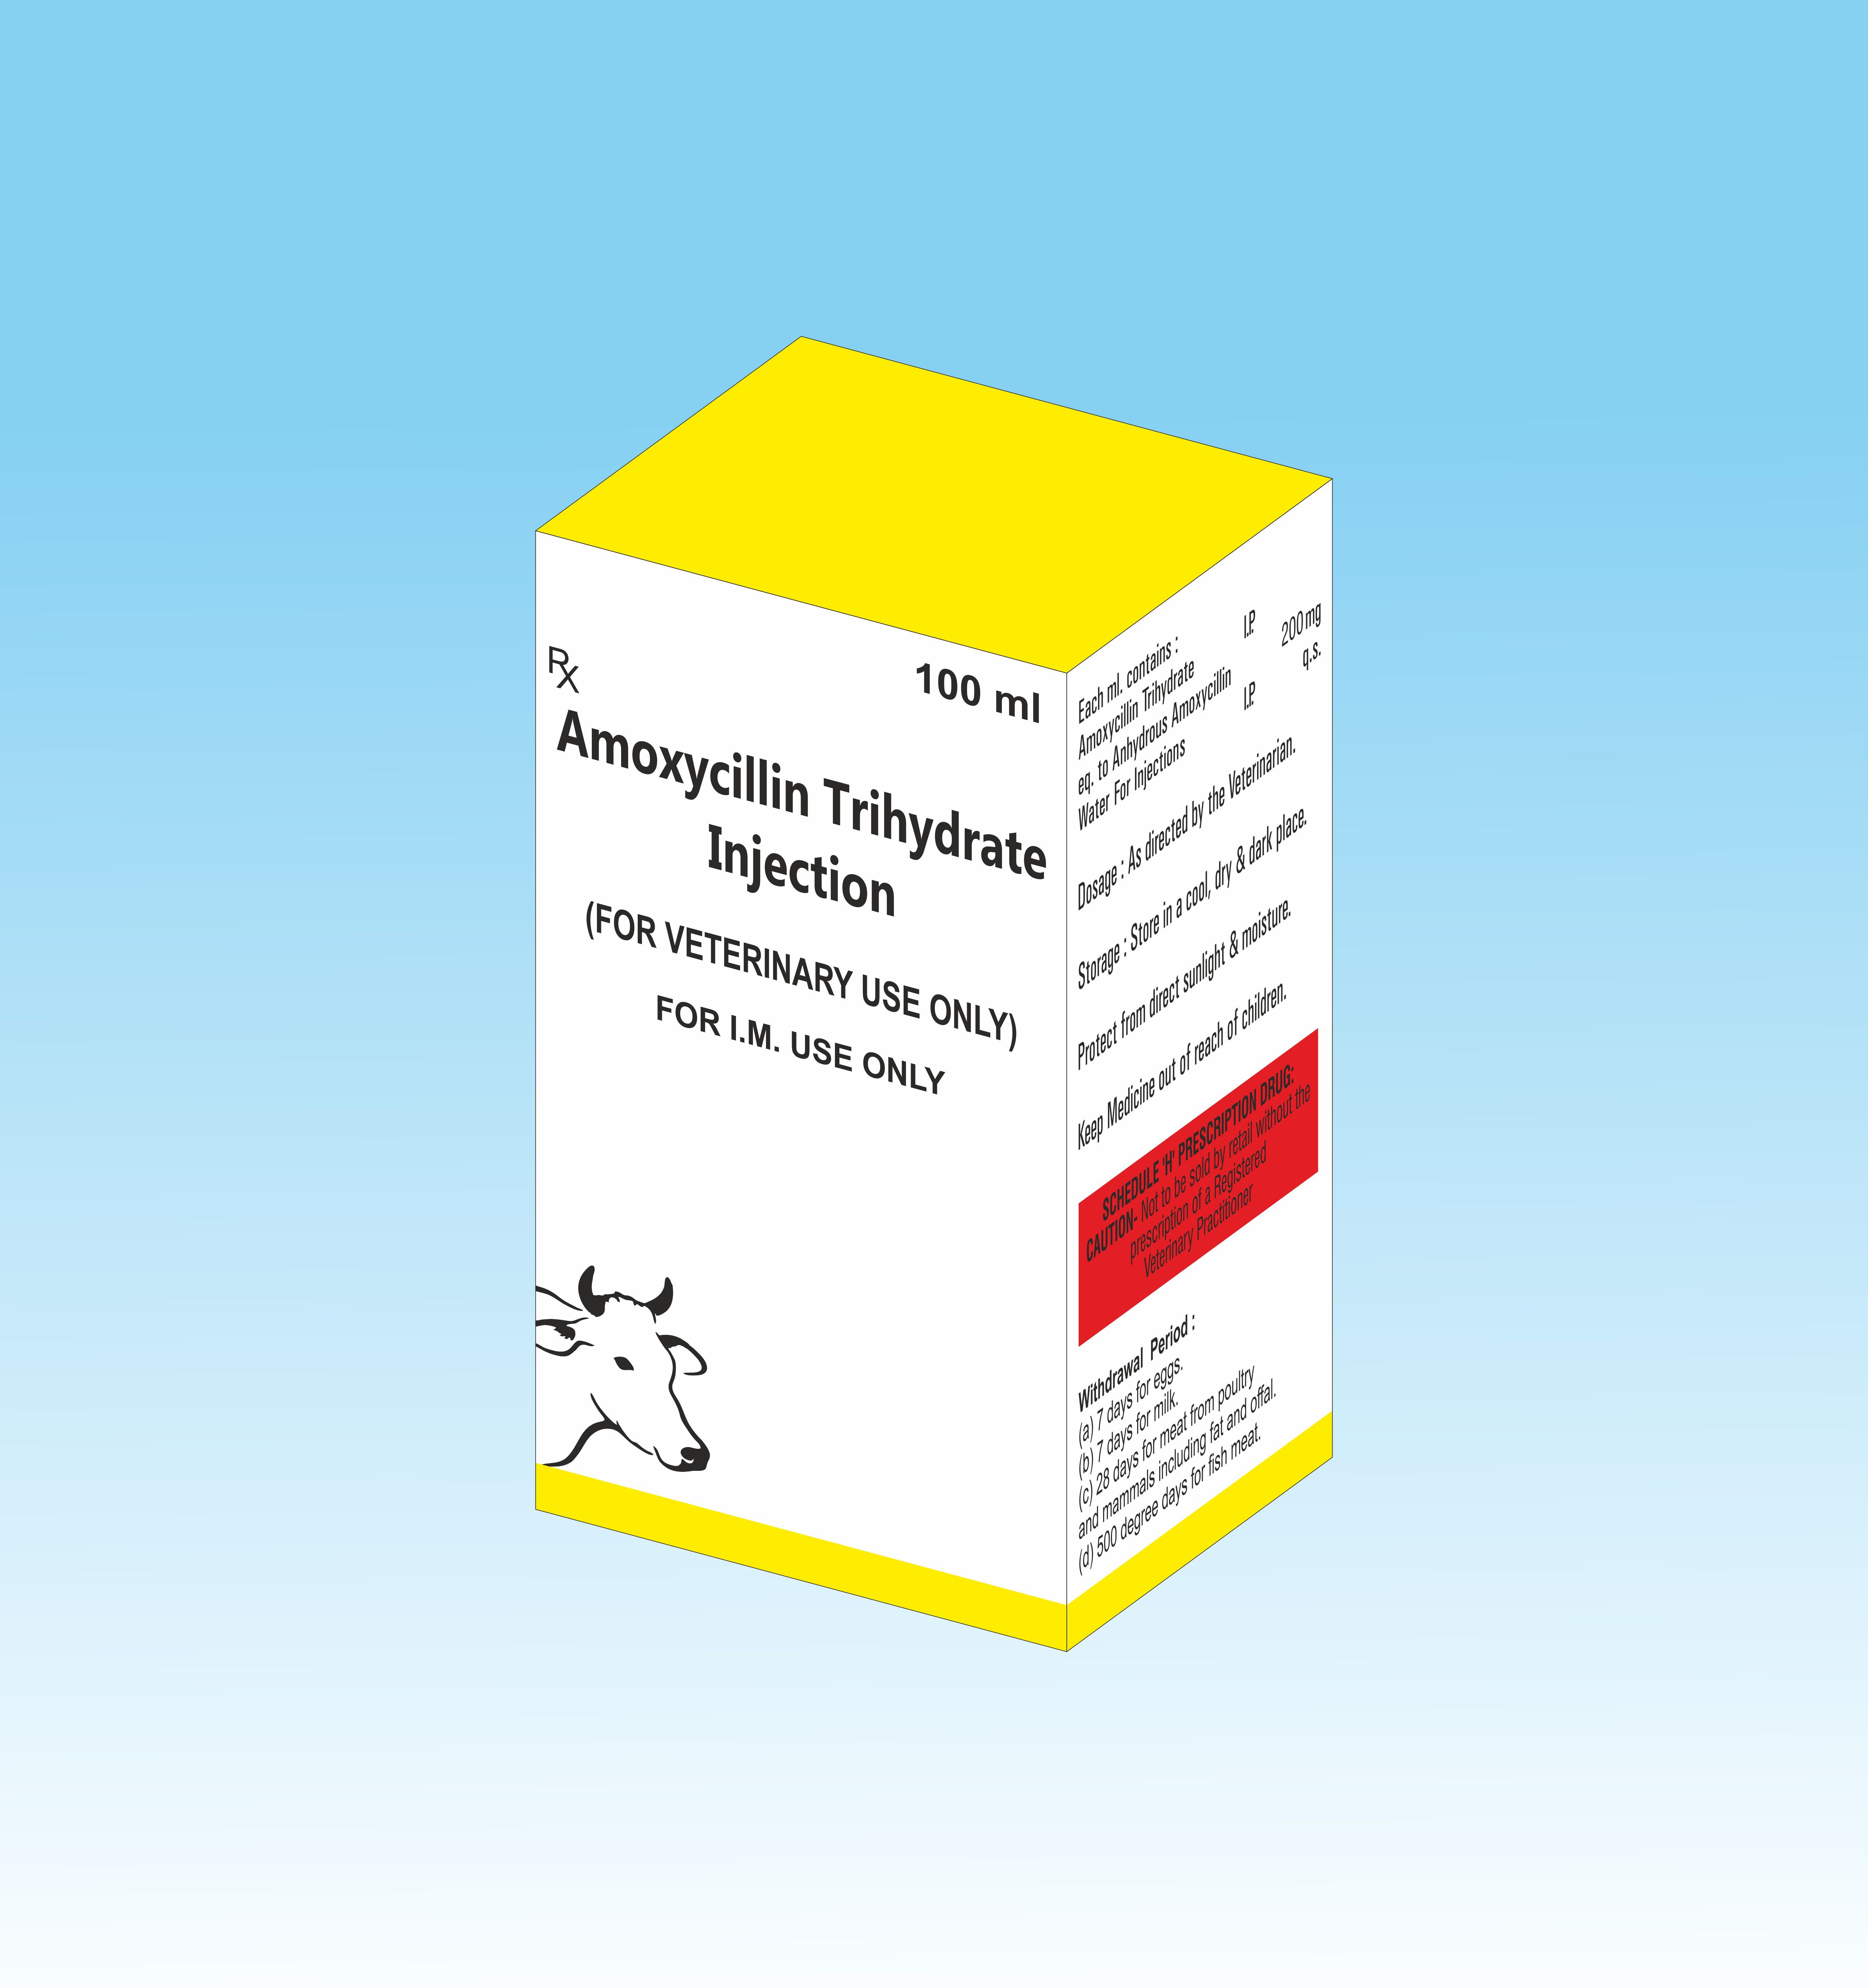 Amoxycillin Trihydrate Injection